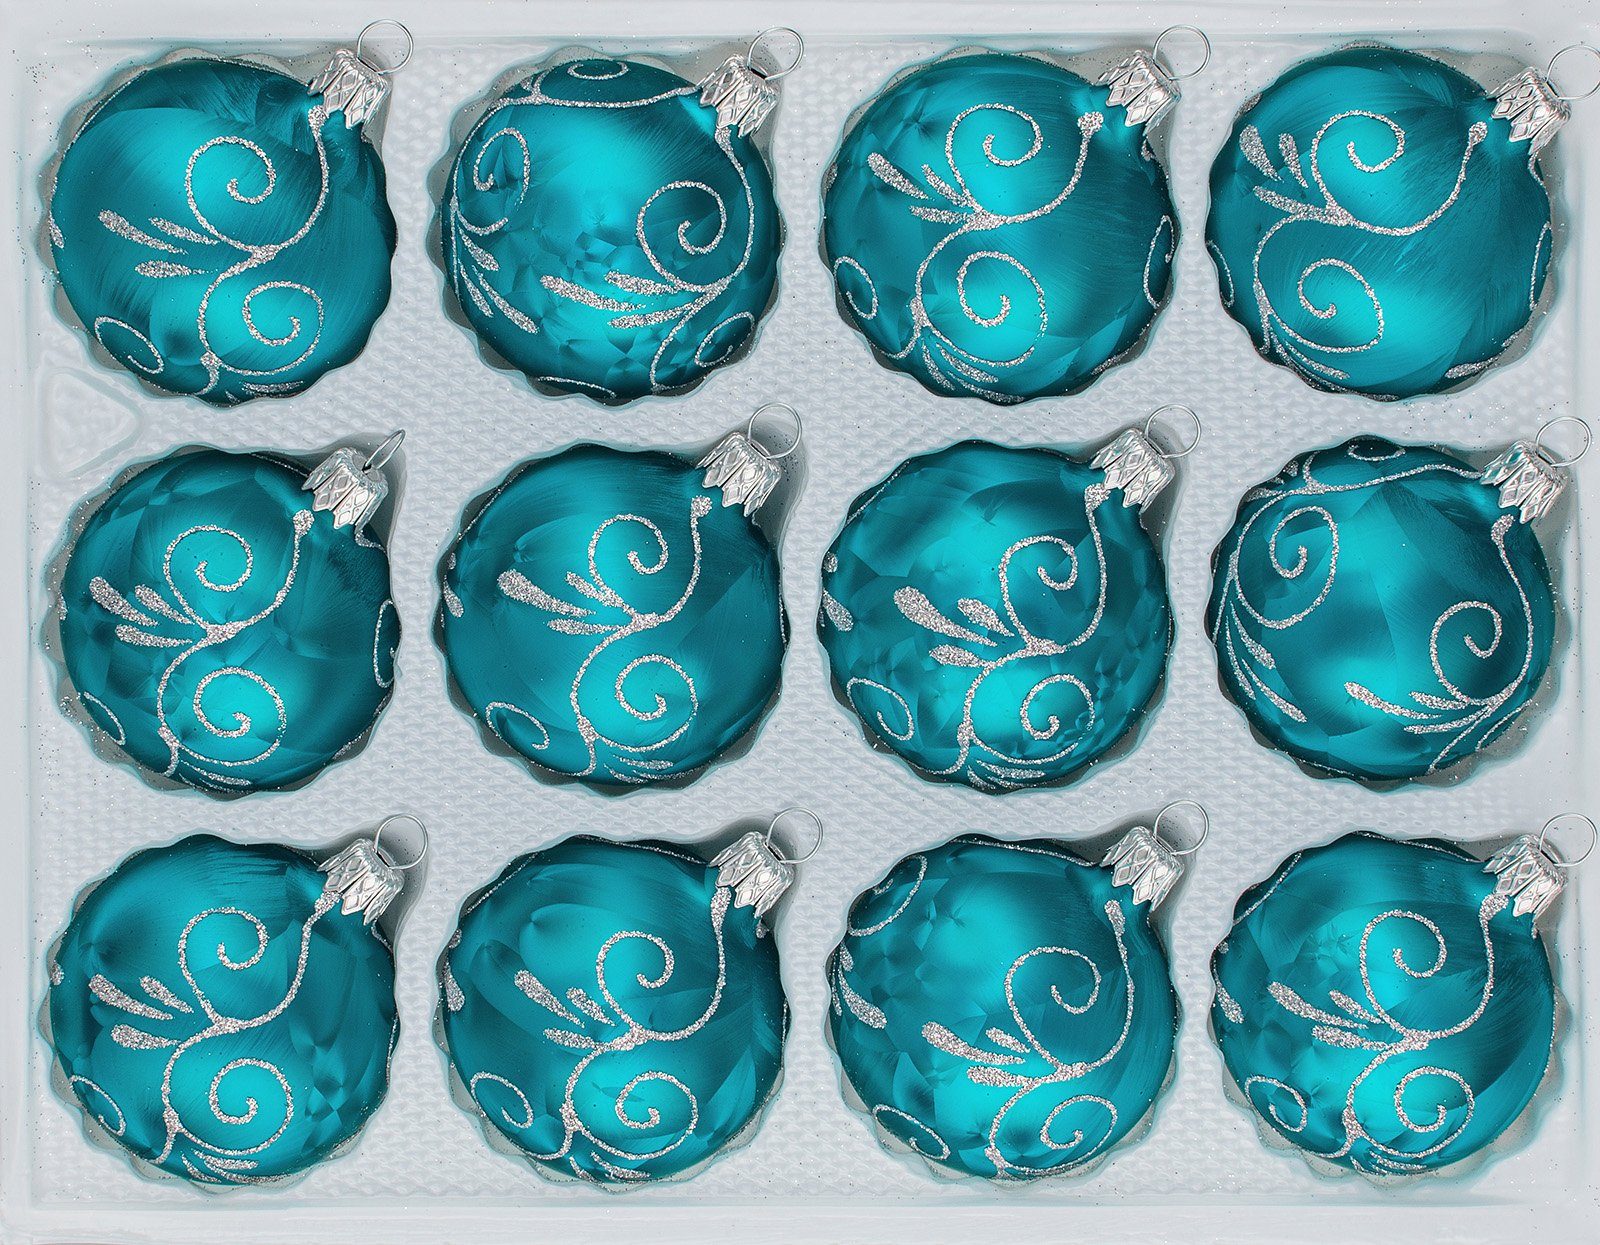 Navidacio Weihnachtsbaumkugel 12tlg. Glas-Weihnachtskugeln Set "Ice Petrol-Türkis Silber Ornamente"